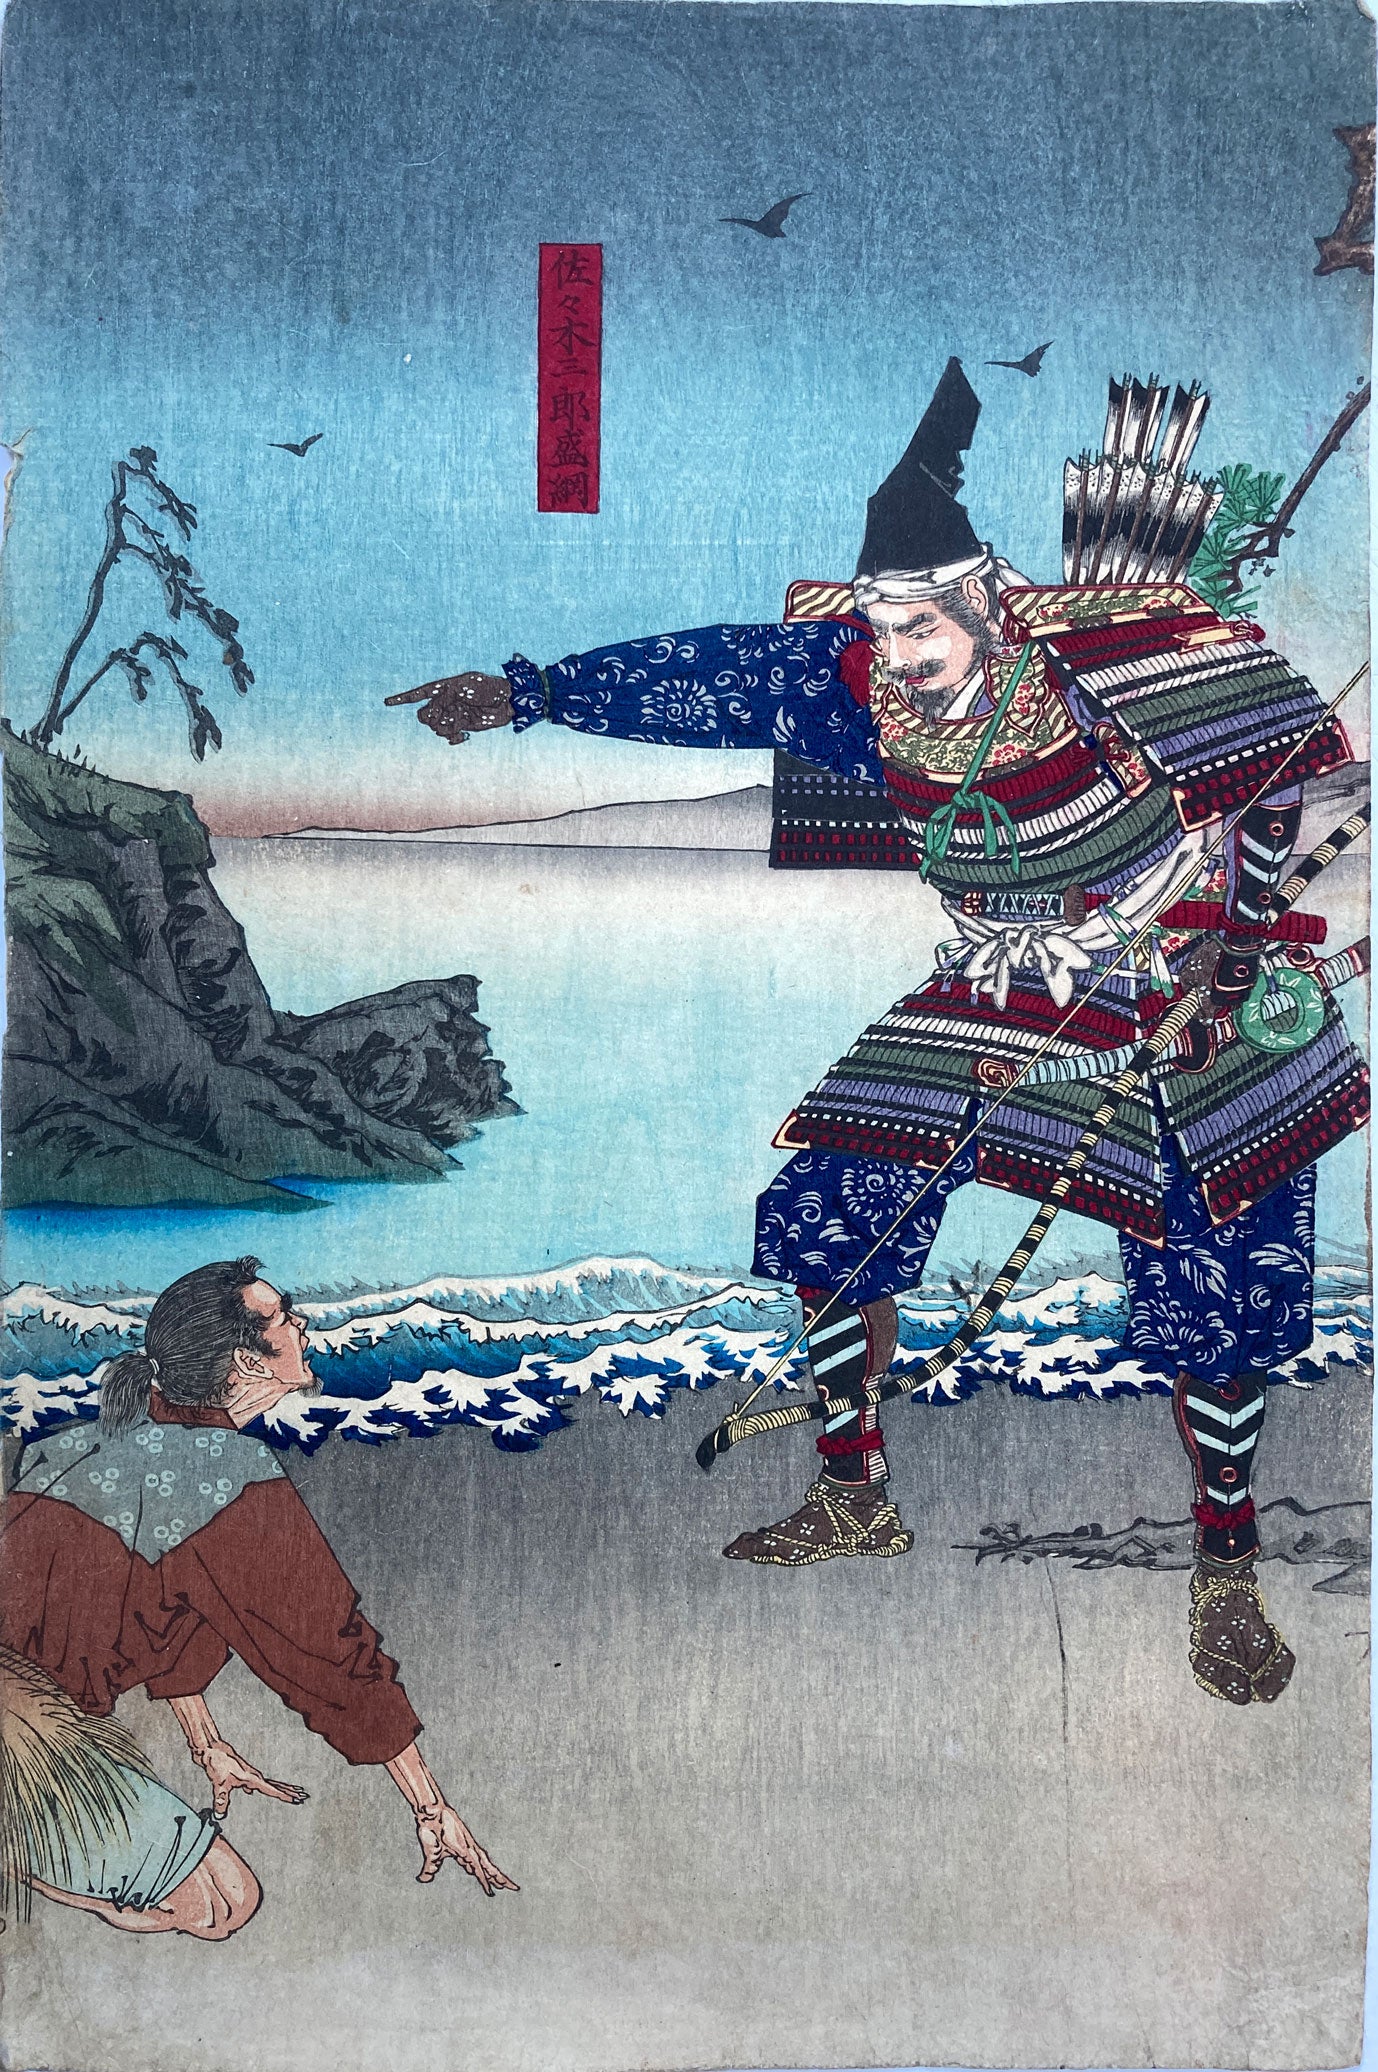 Mizuno Toshikata - Moritsuna and the Fisherman